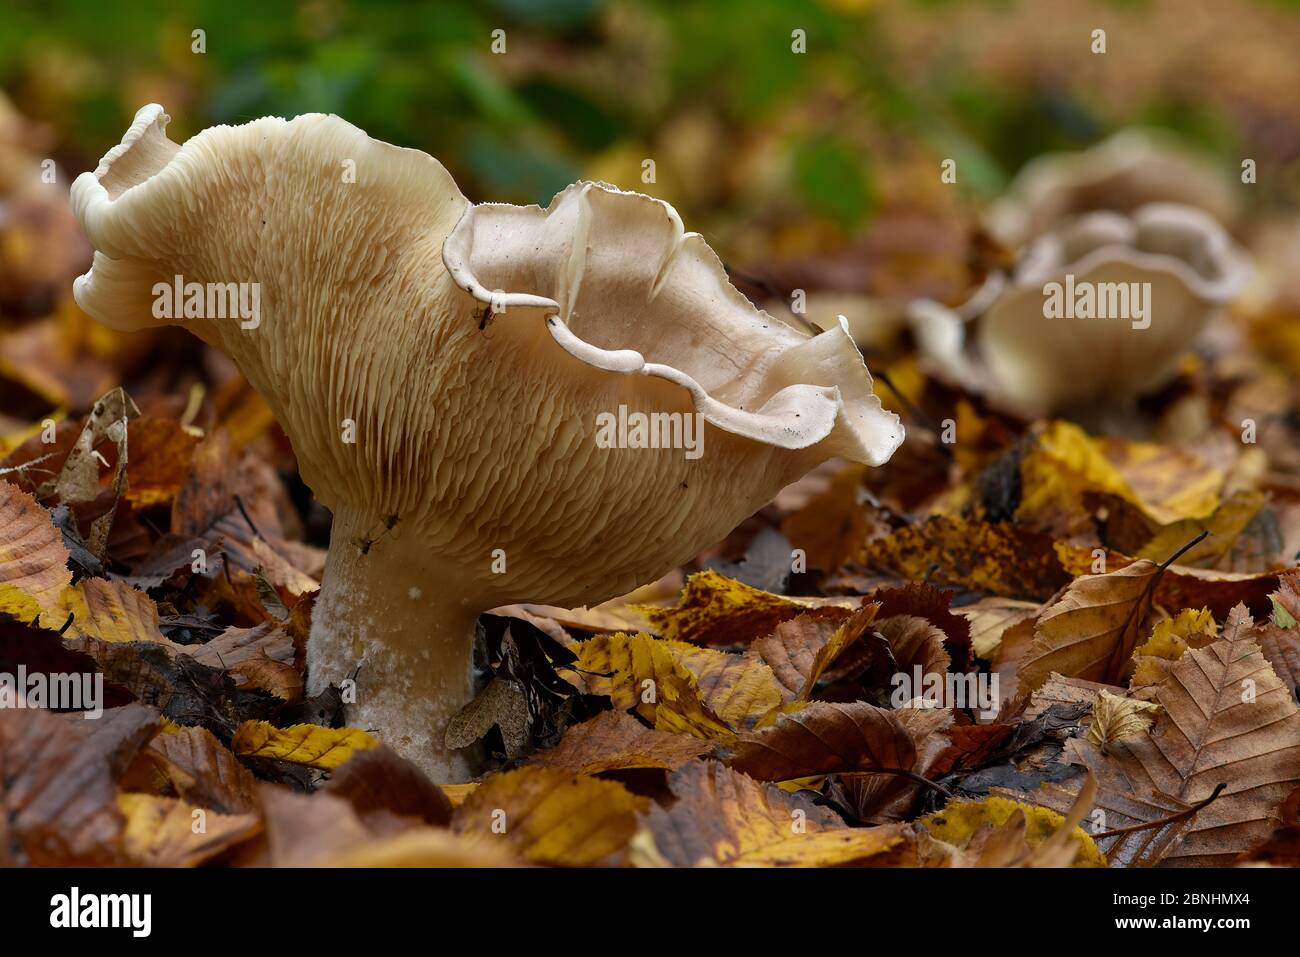 Giant funnel fungus (Leucopaxillus giganteus) uncommon species, Hertfordshire, England, UK, November. Focus stacked image. Stock Photo